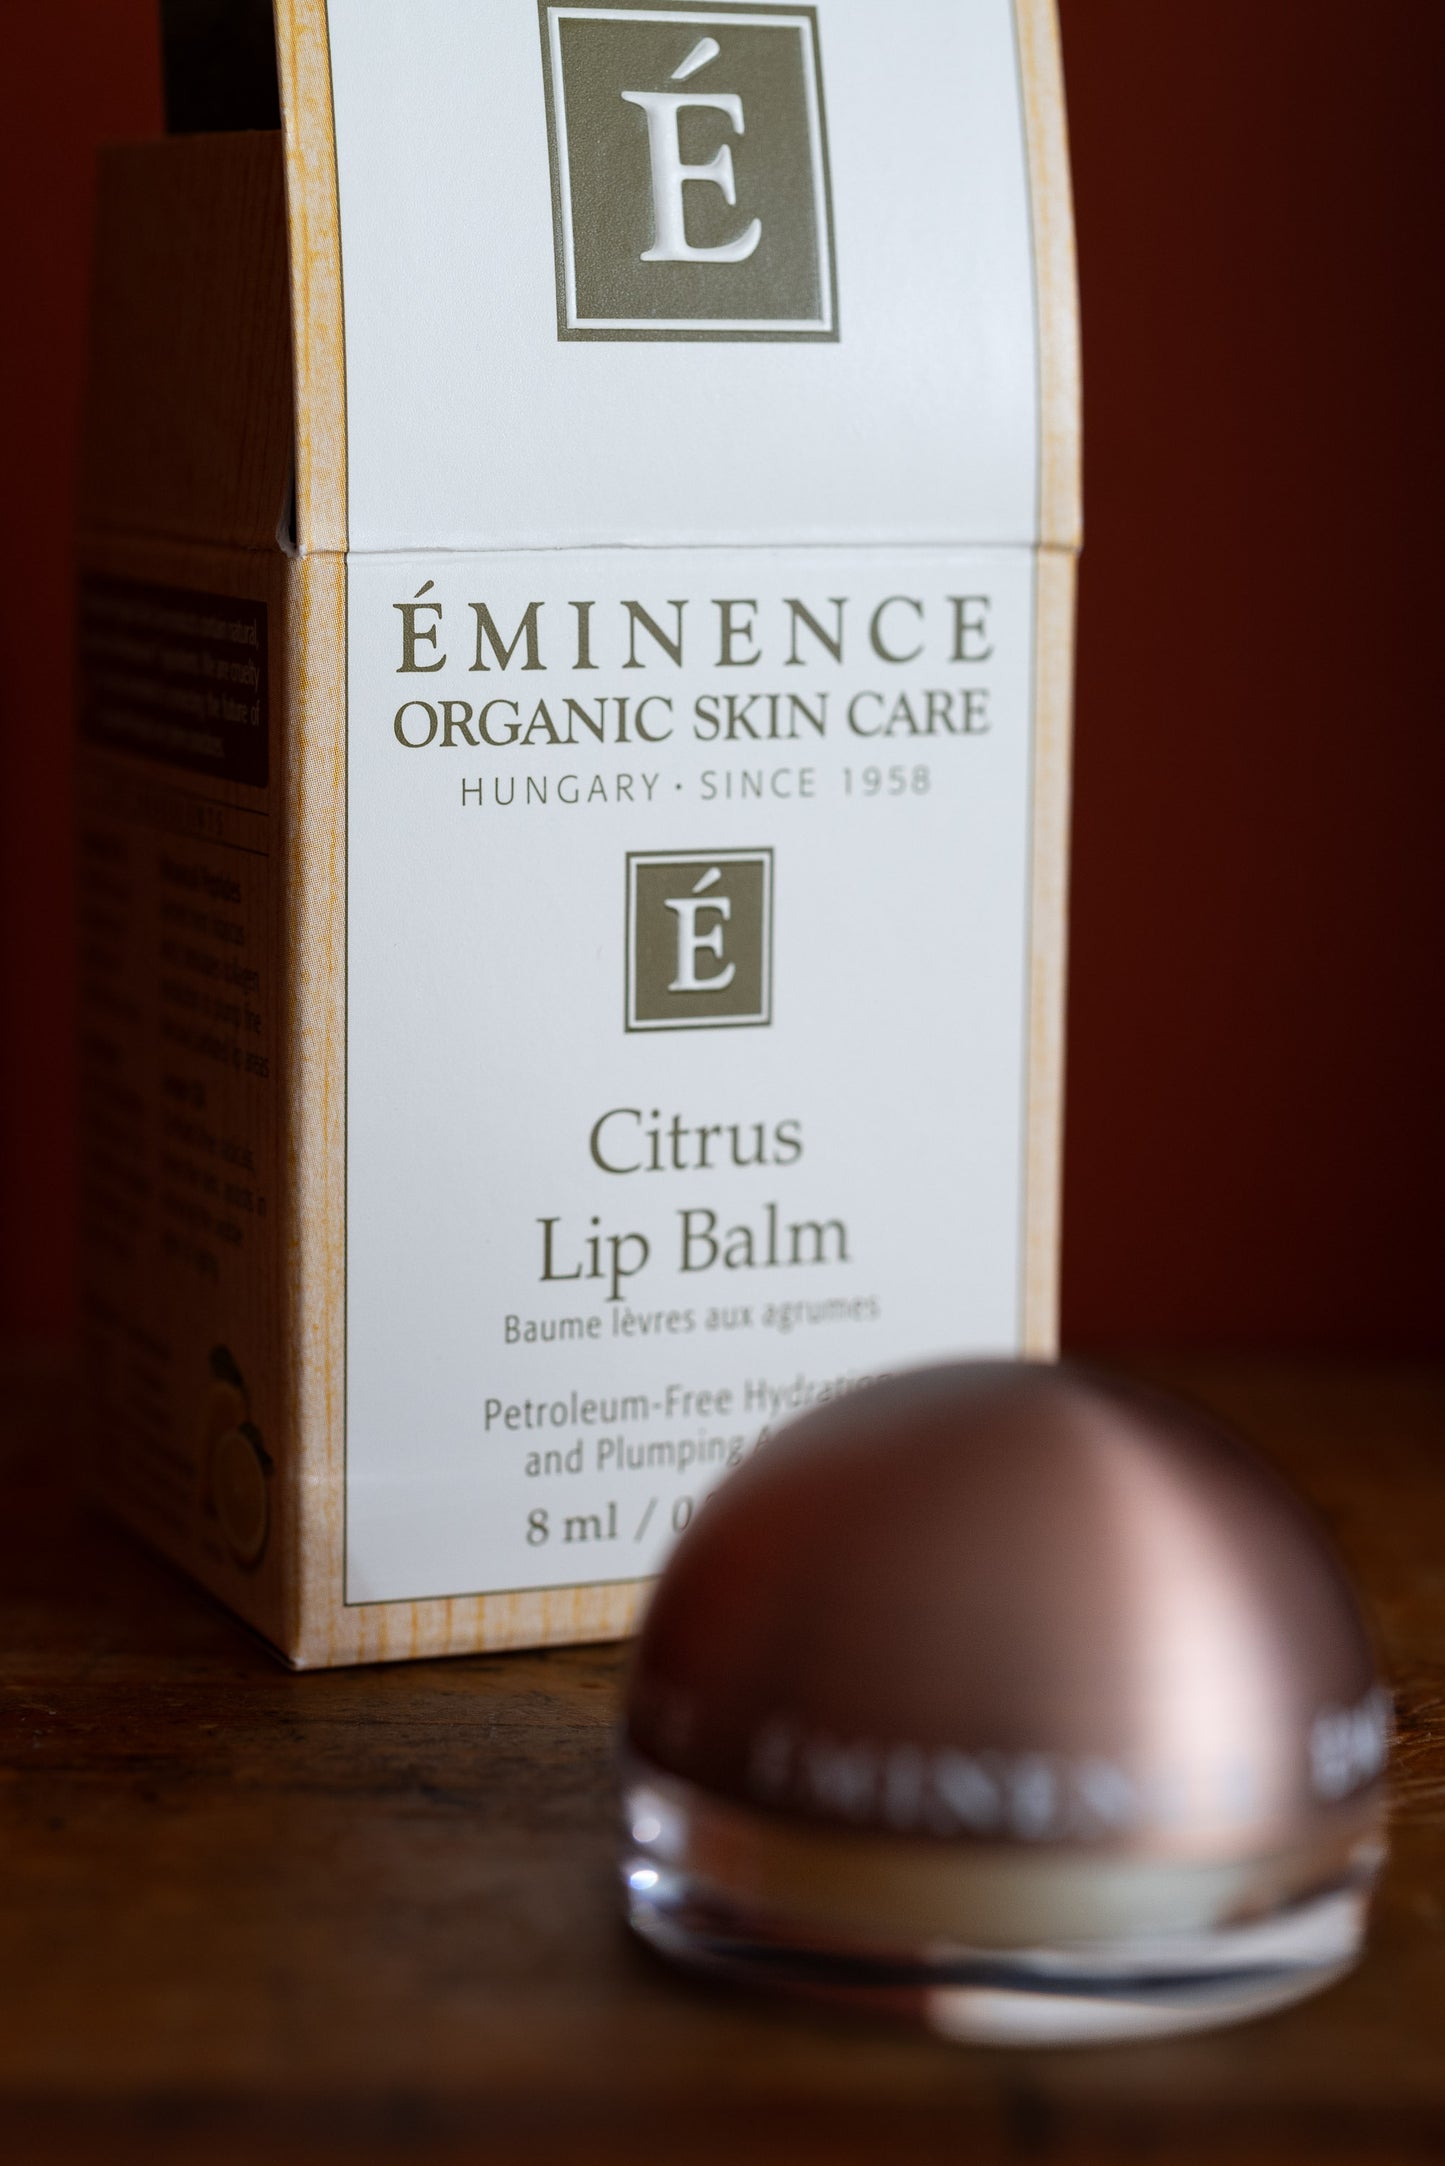 Eminence Organic Skin Care Citrus Lip Balm